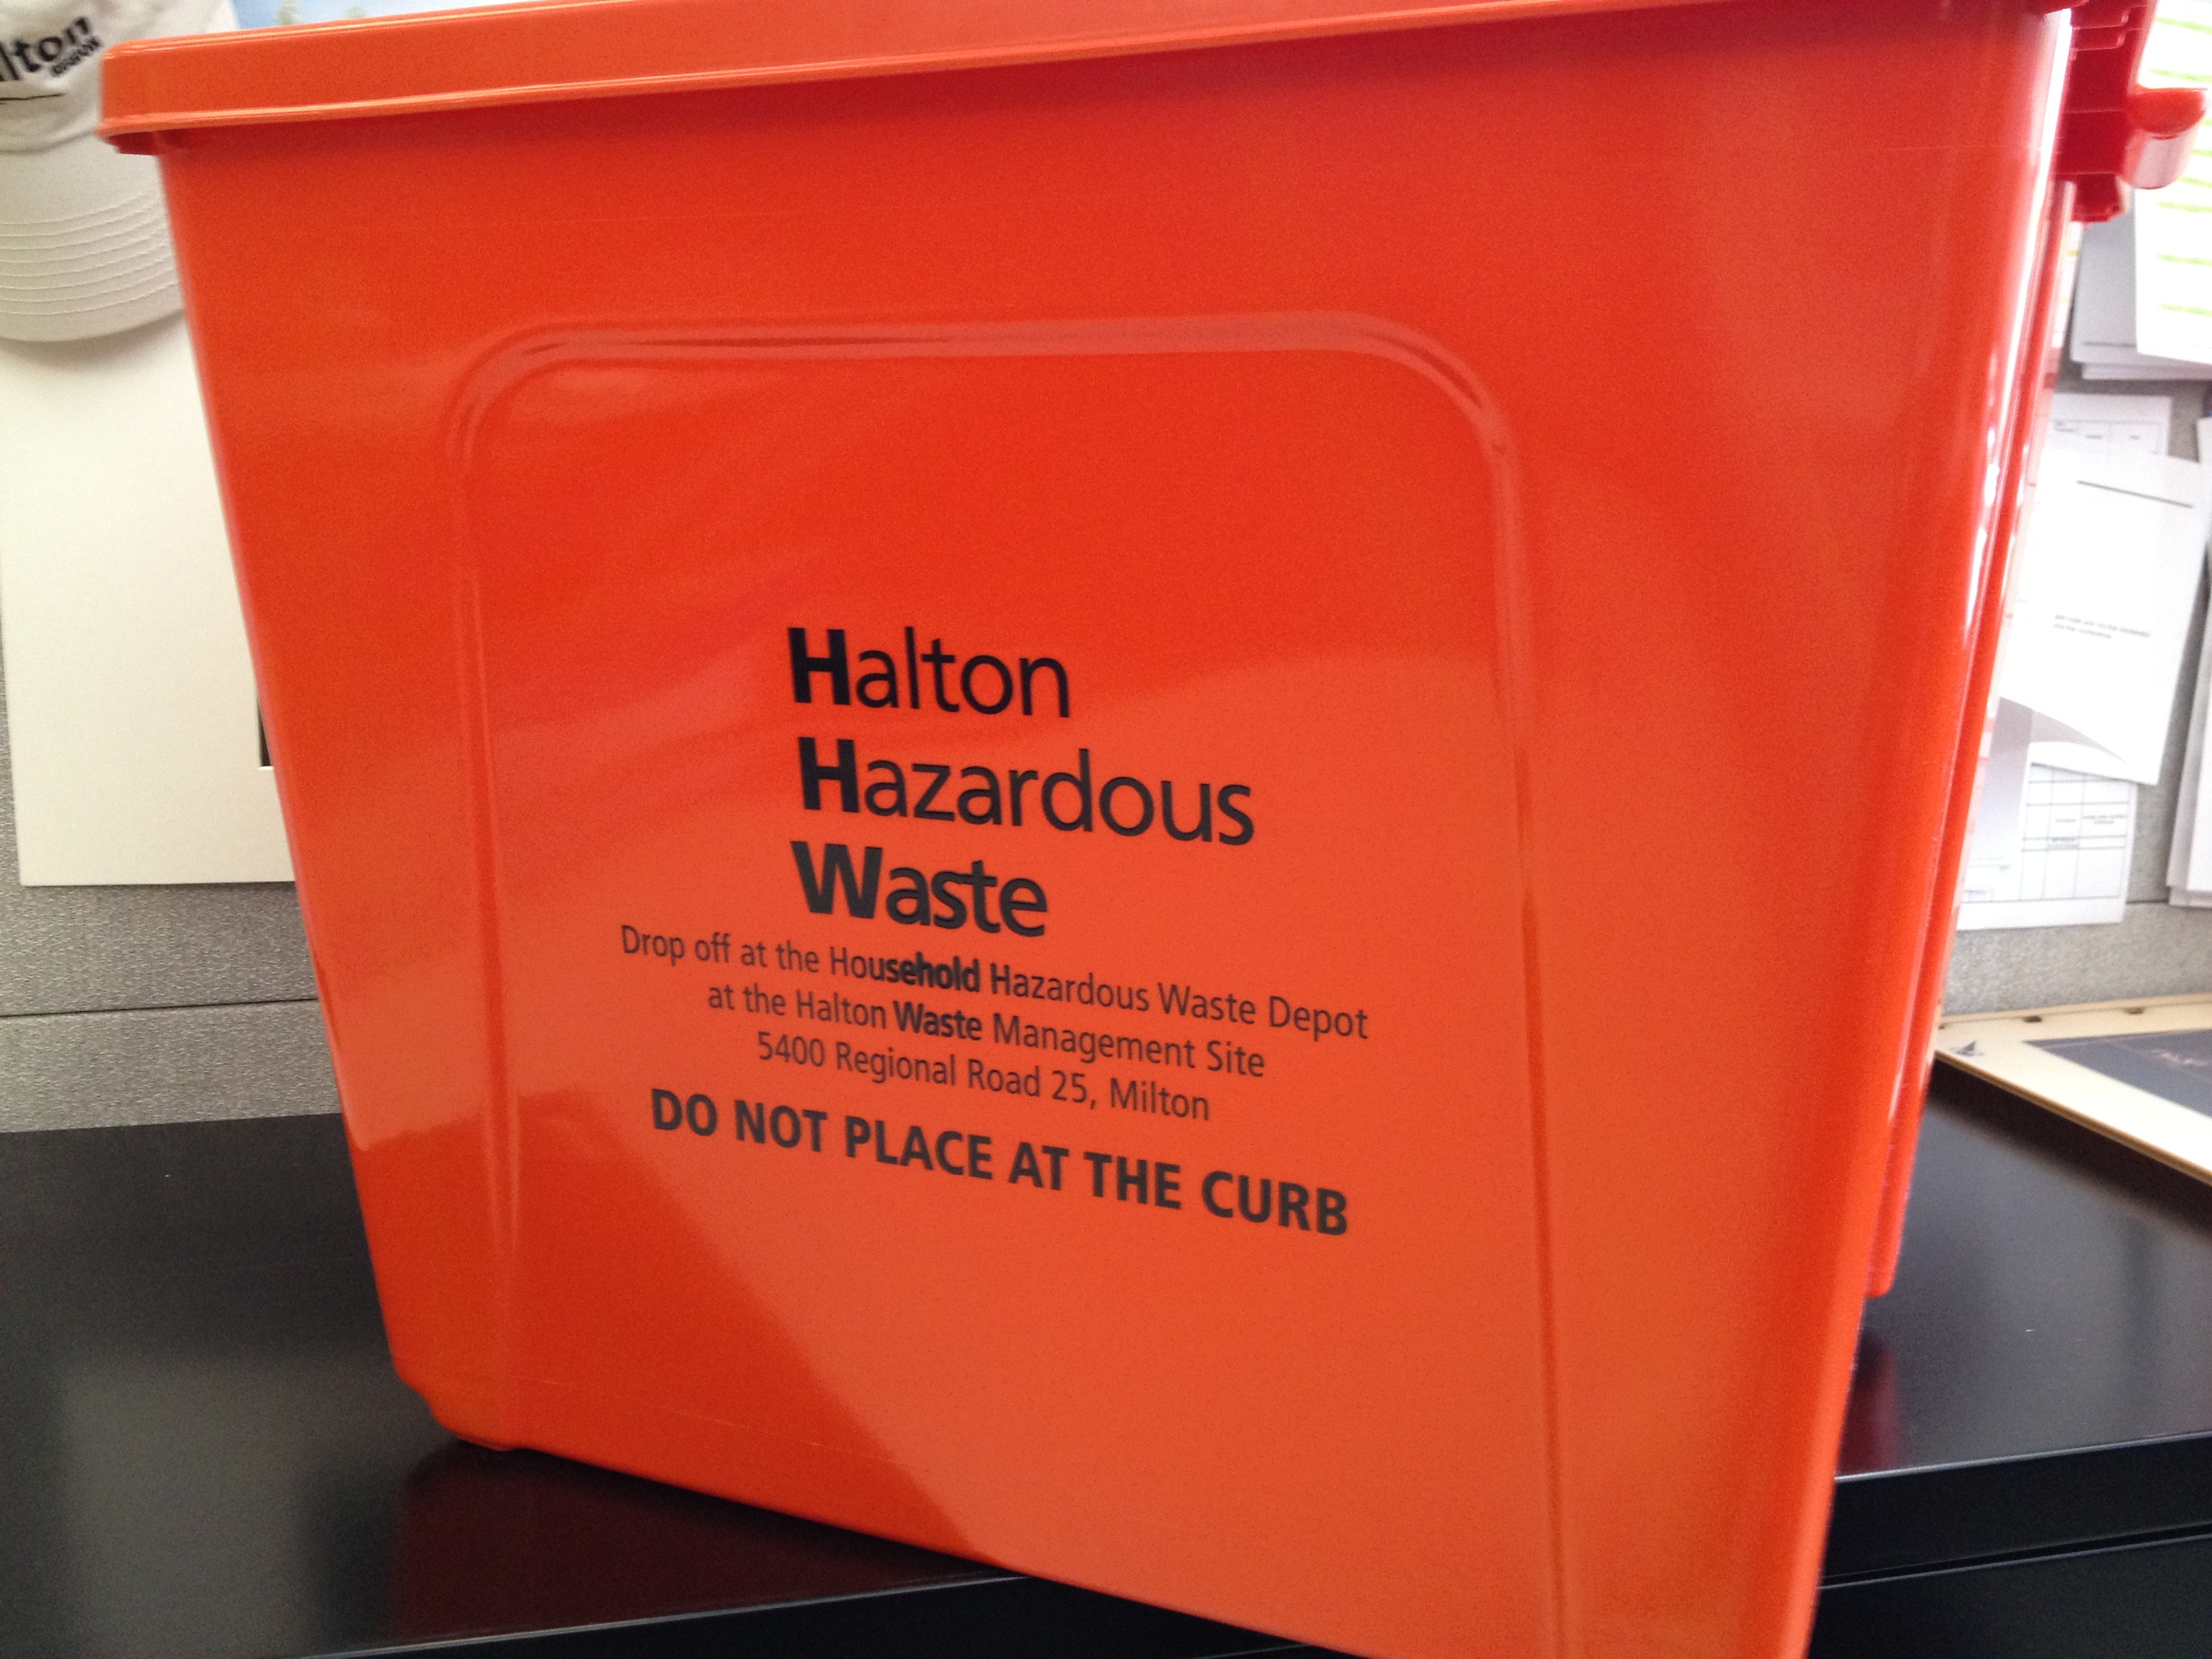 Halton Haz Waste – For the Orange Box